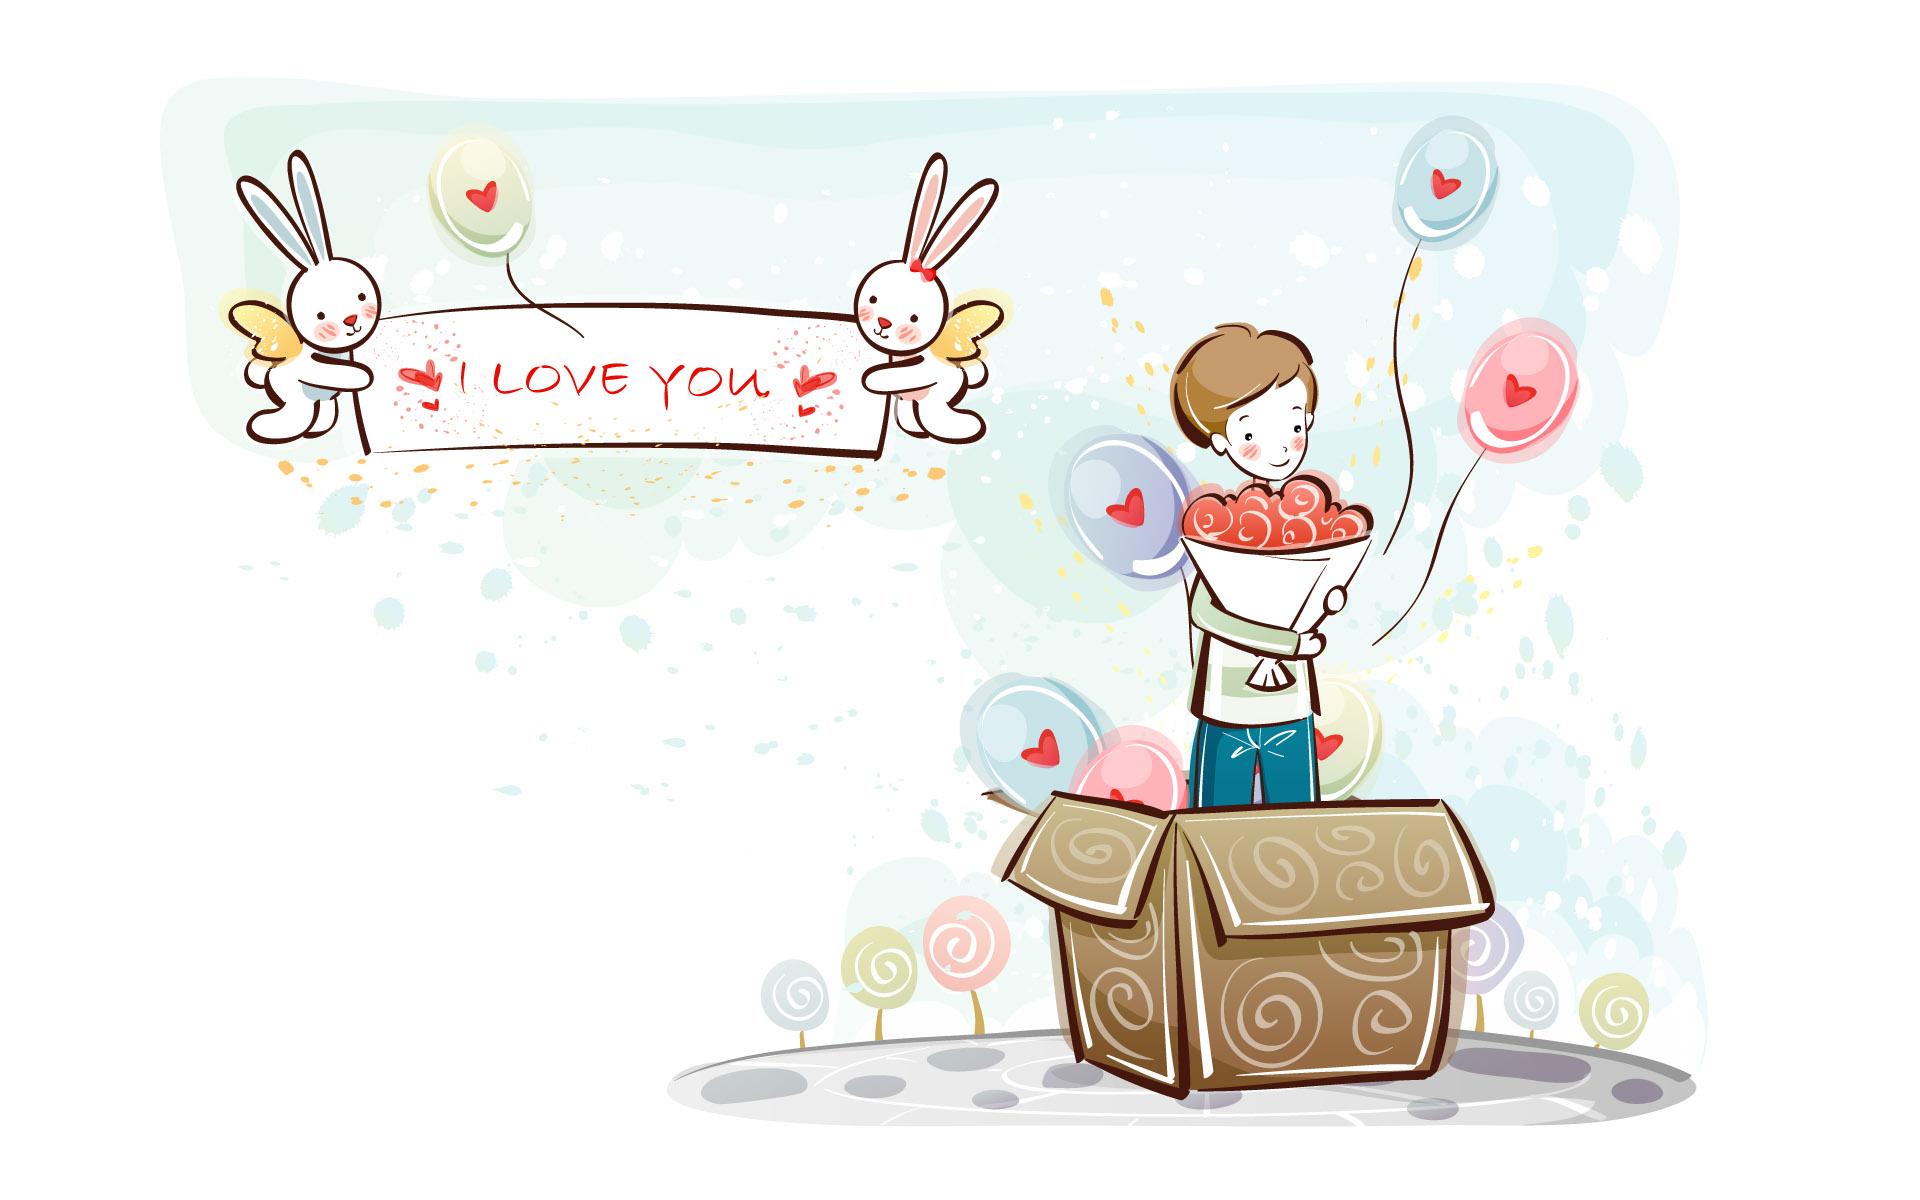 Free Love Cartoon Couple Wallpaper, Download Free Clip Art, Free Clip Art on Clipart Library